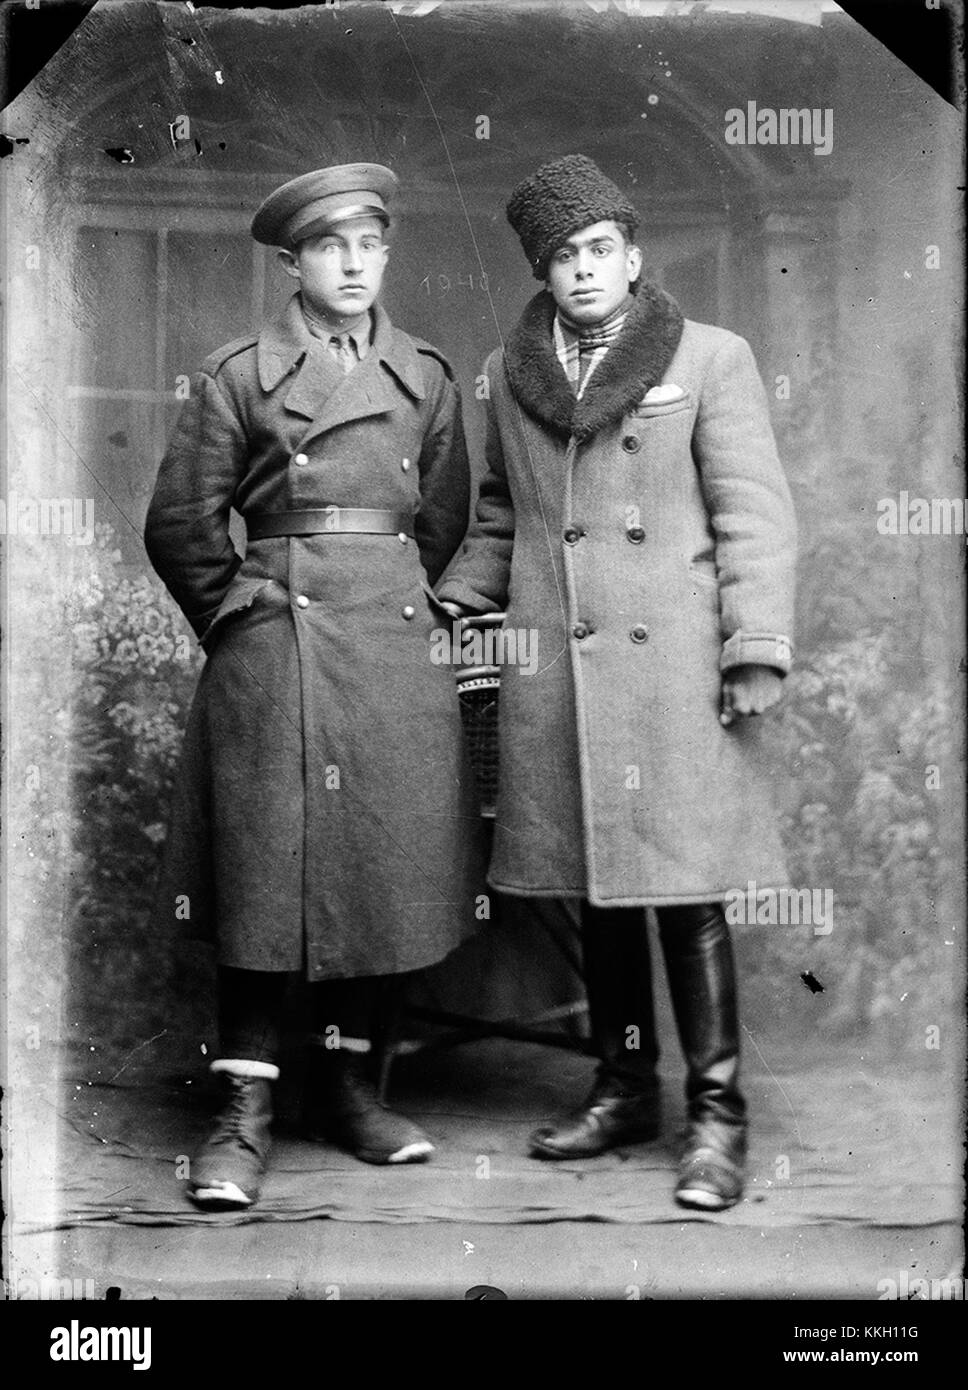 Doi tineri, unul în costum militar, 1940 CA 20131203 (11193131614 Stock  Photo - Alamy